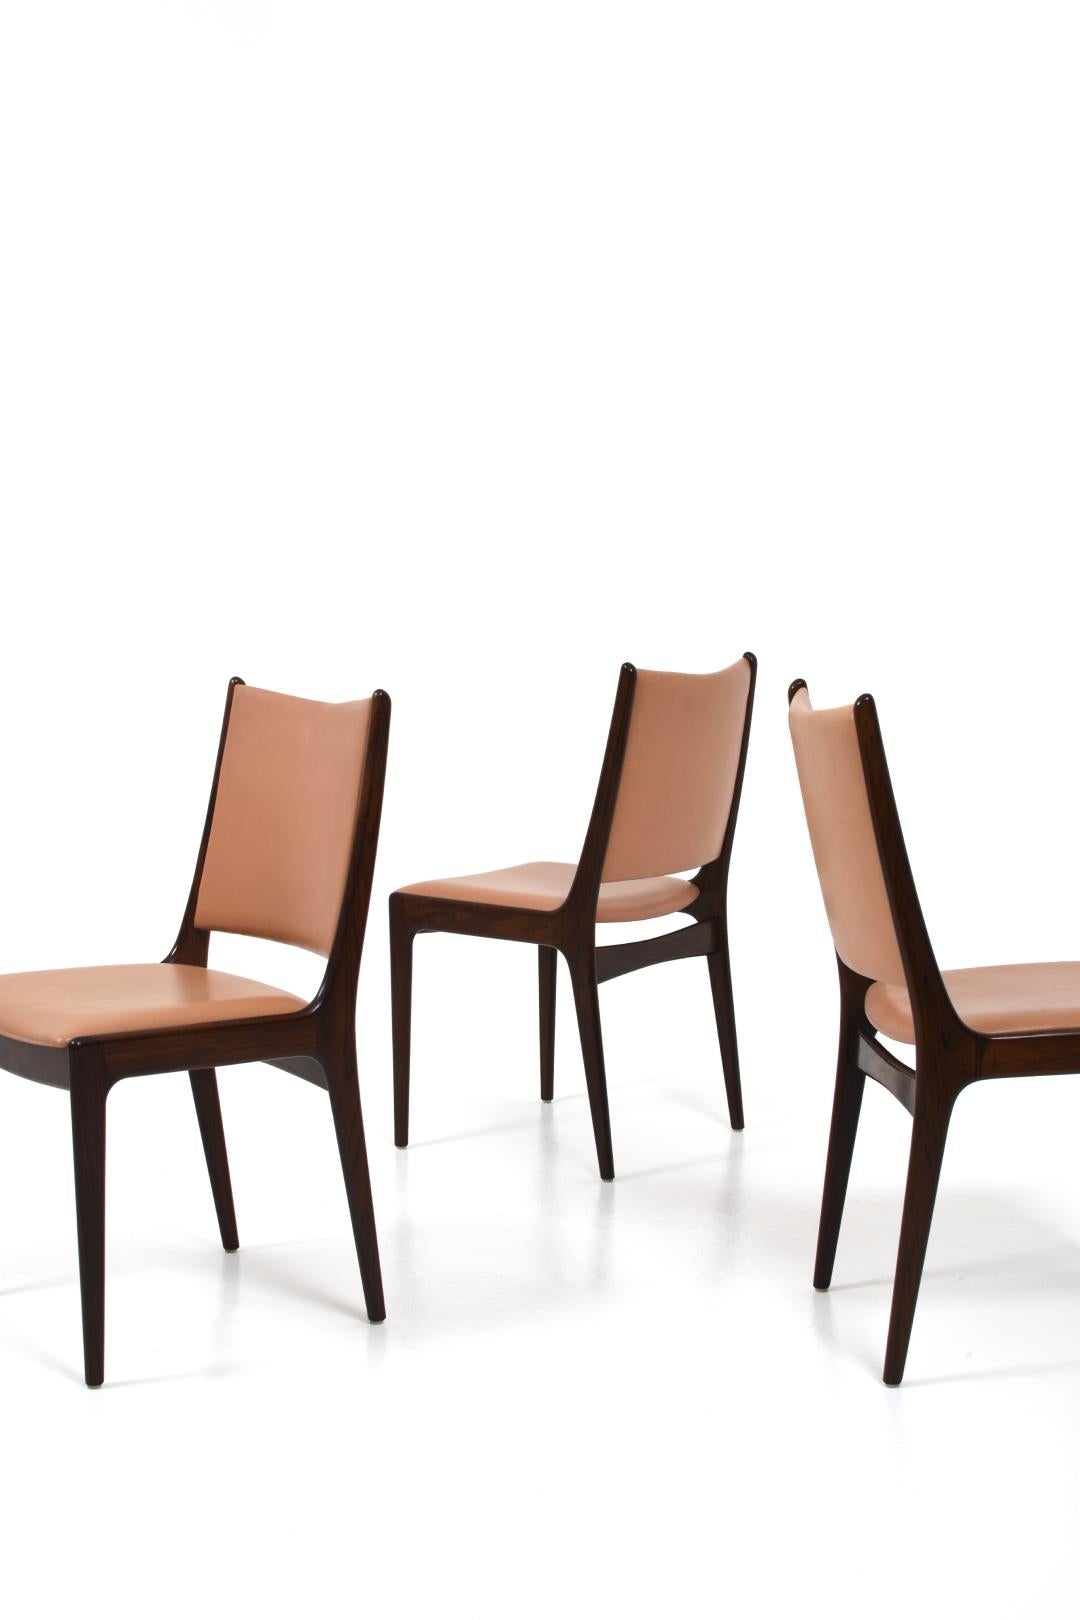 Danish Dining Chairs by Johannes Andersen for Uldum Møbelfabrik 1960s